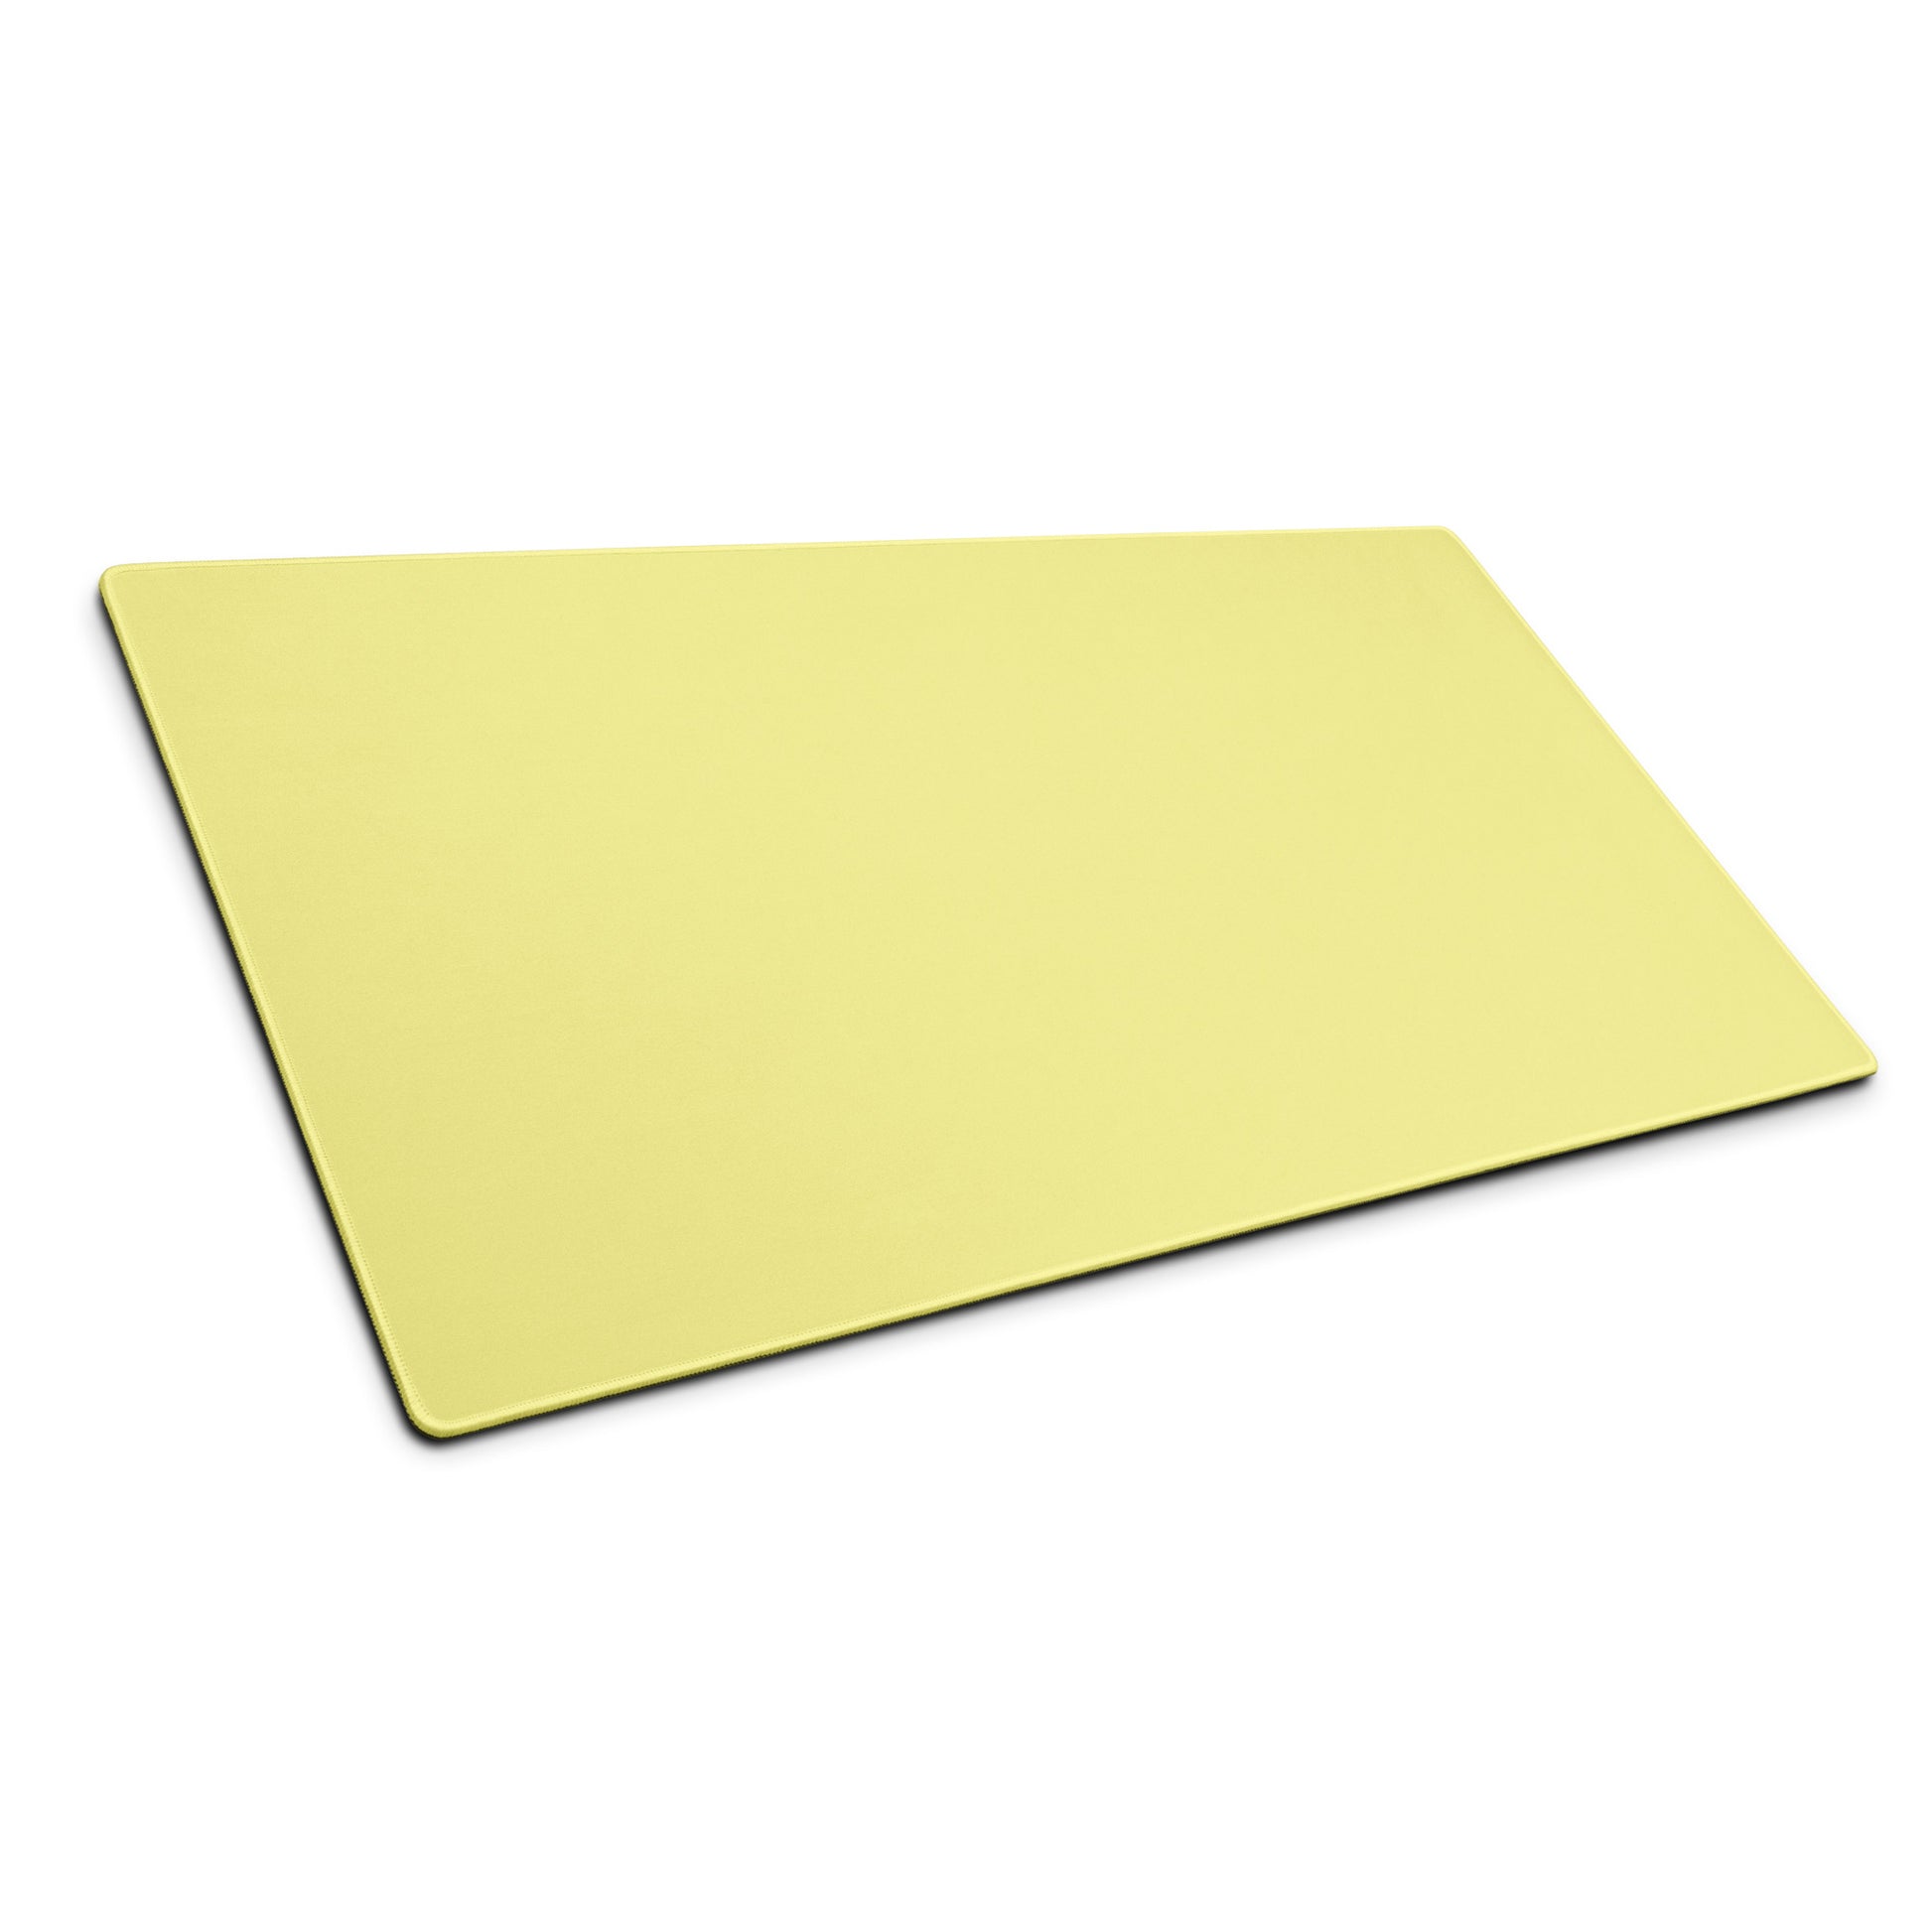 A 36" x 18" yellow gaming desk pad sitting at an angle.